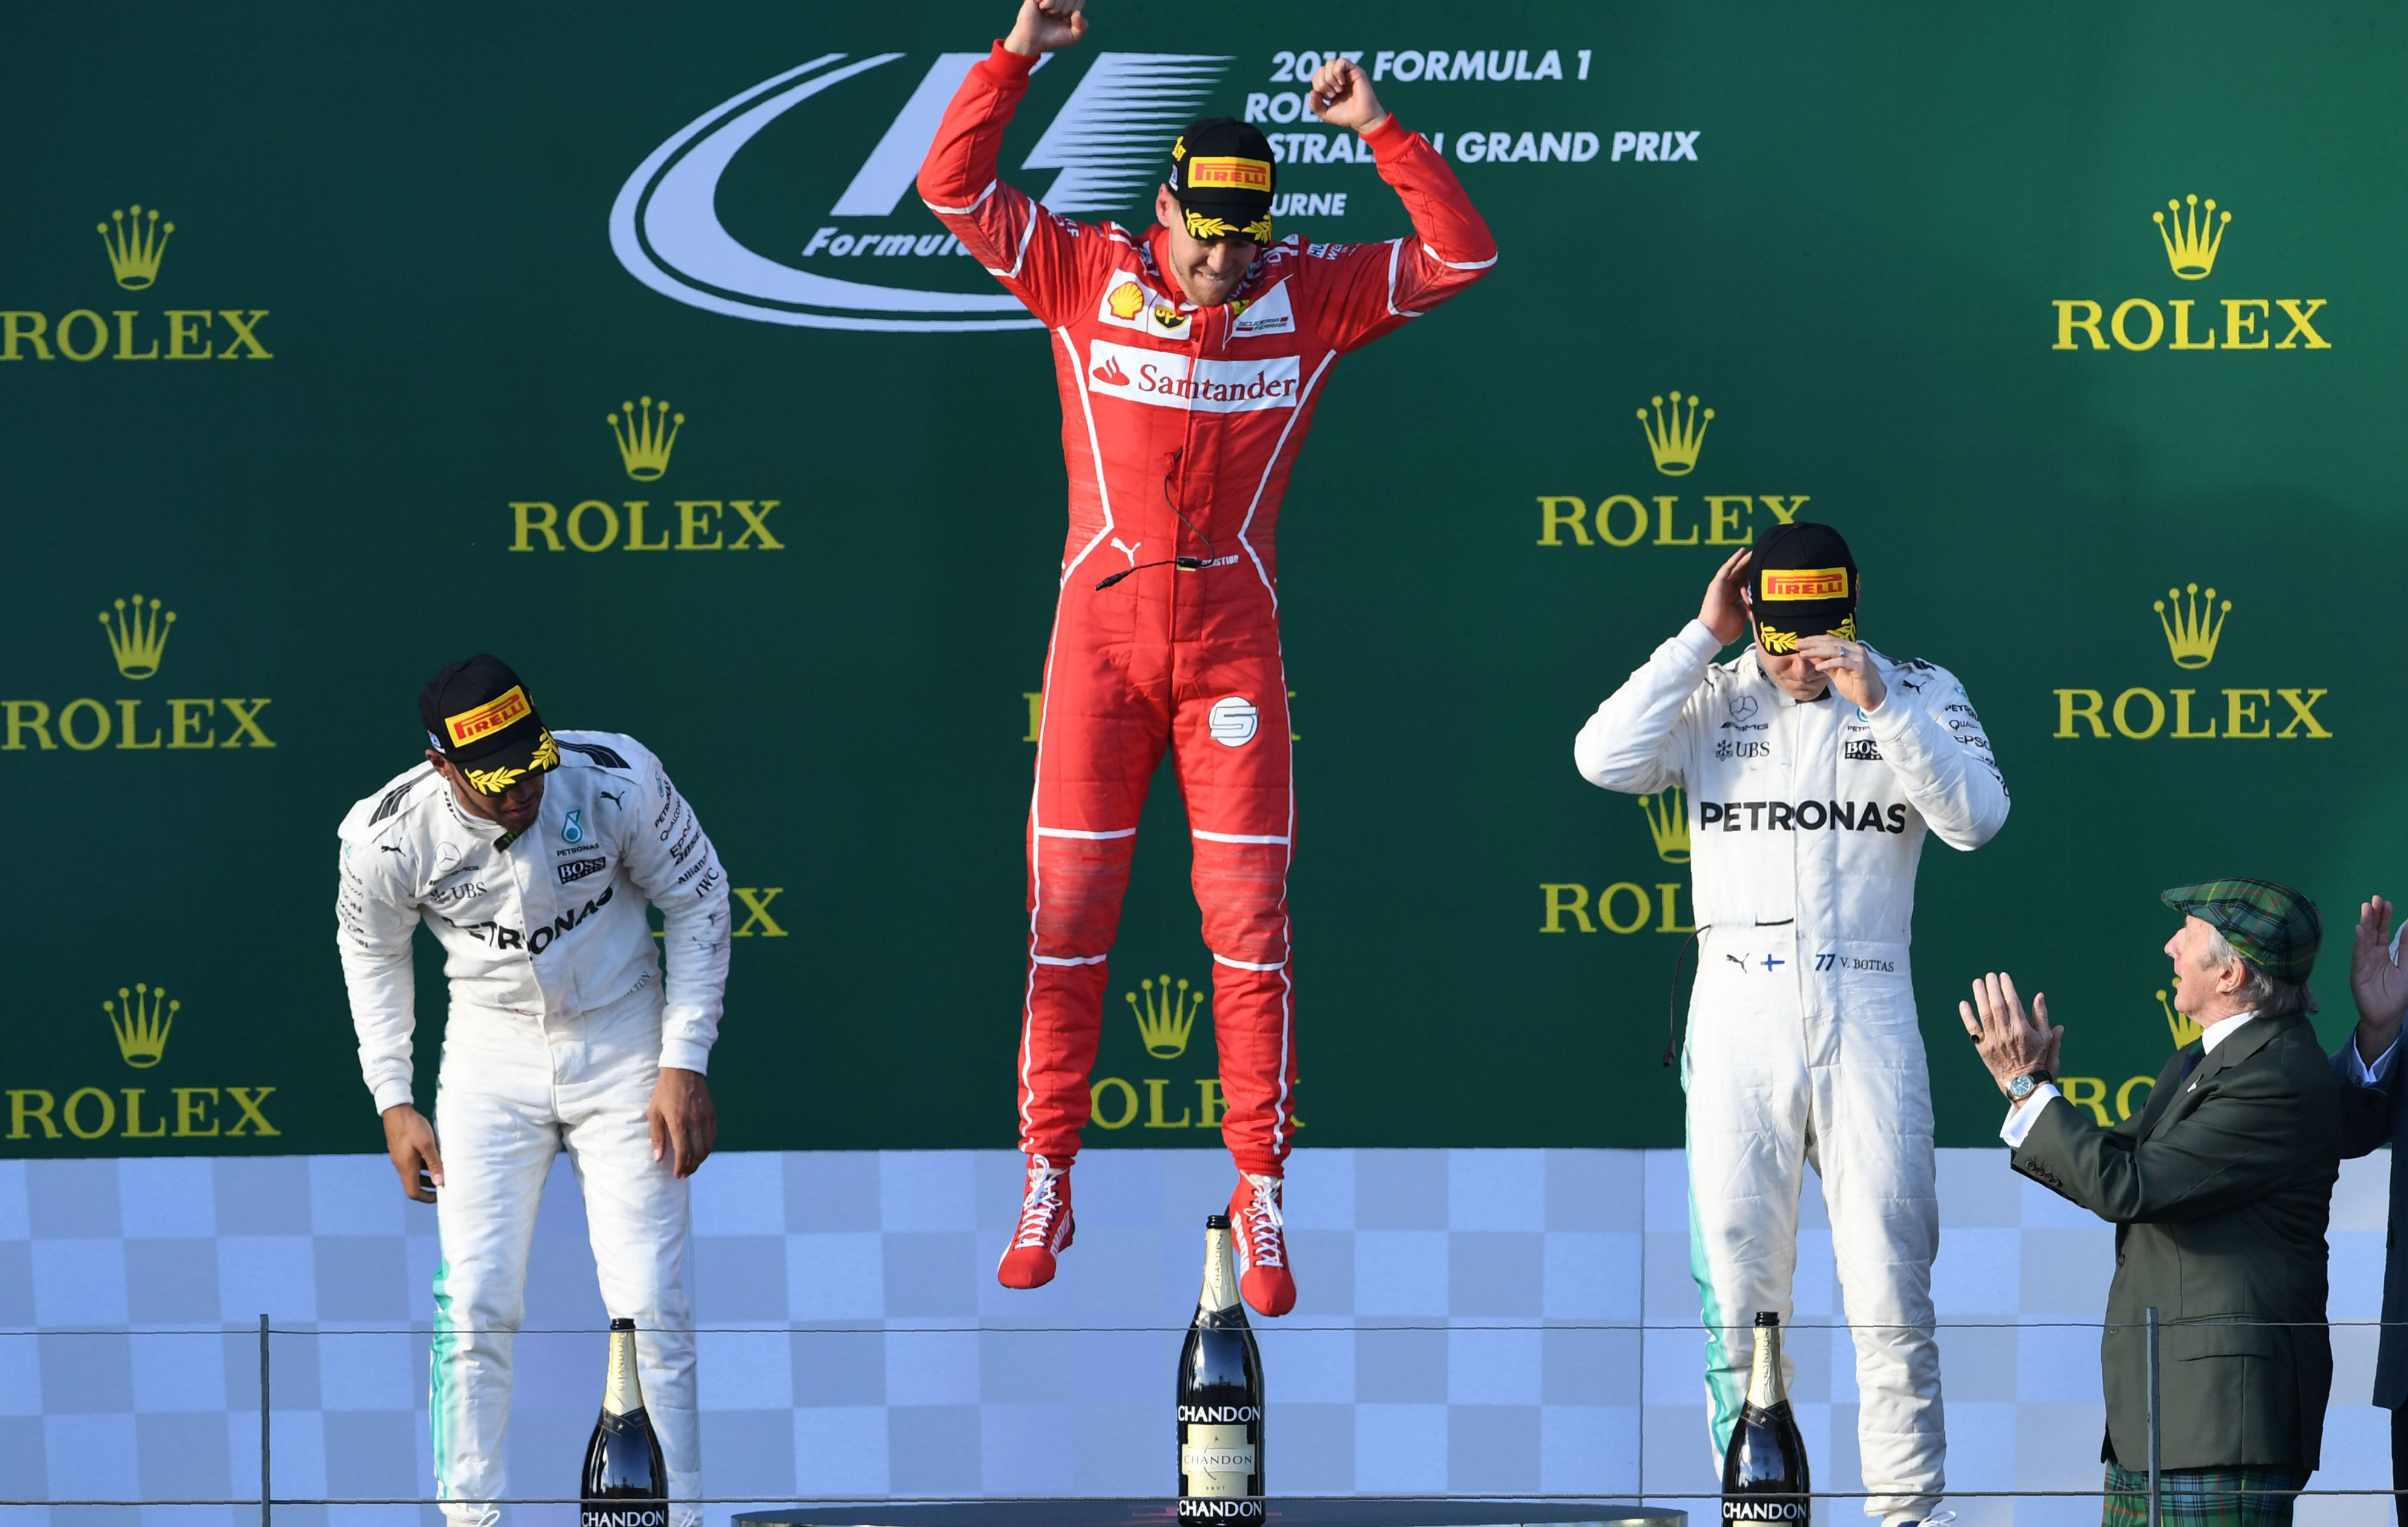 Australian Grand Prix in Melbourne